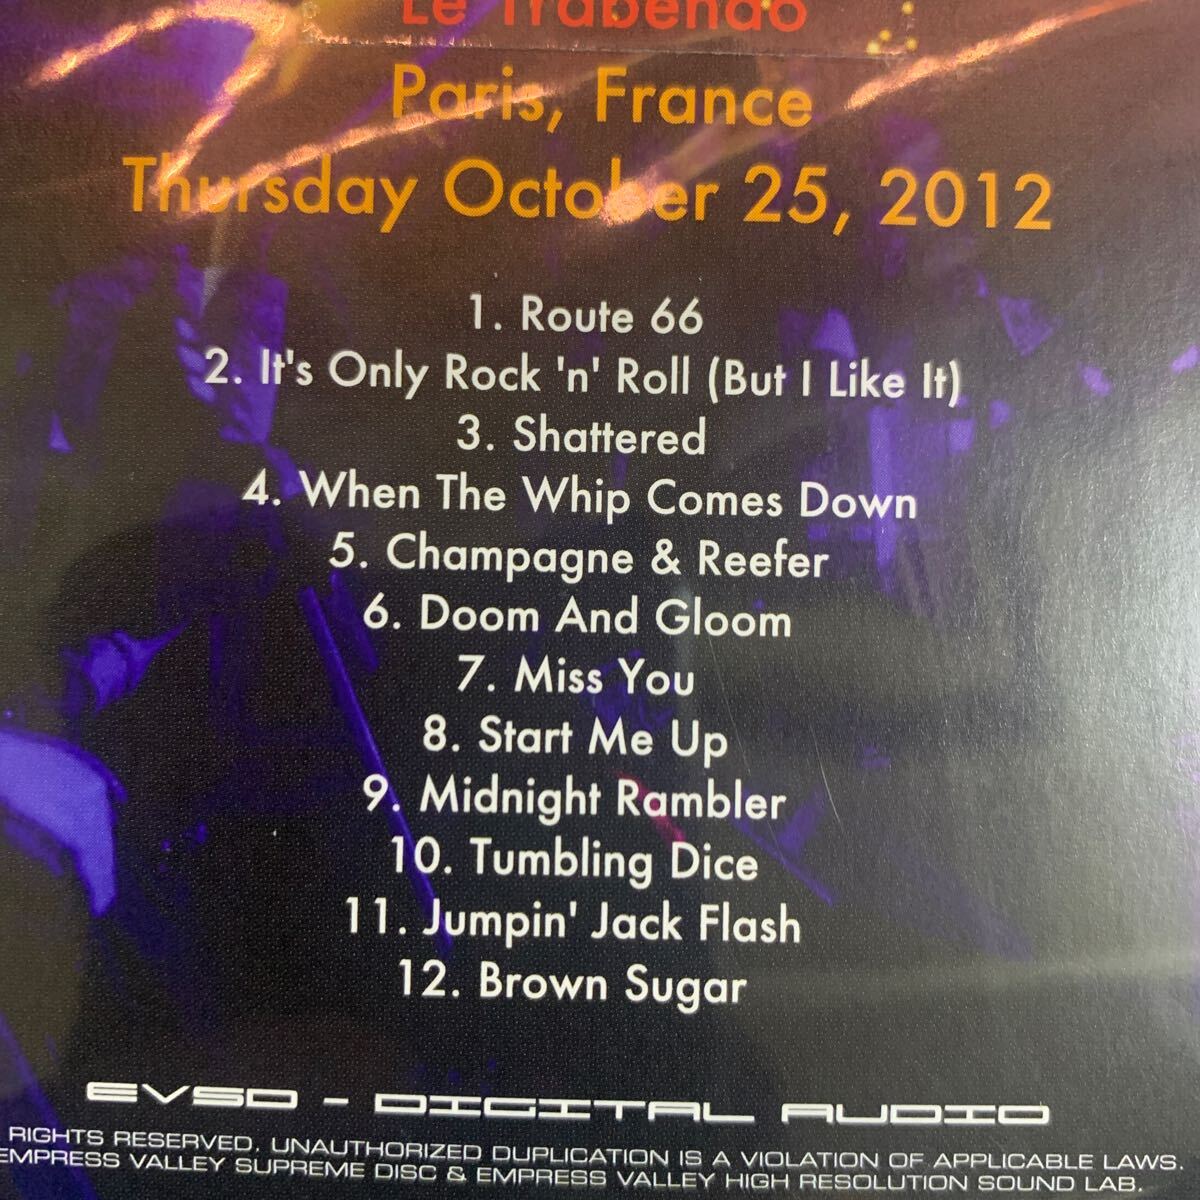 THE ROLLING STONES / LE TRABENDO (CD) 2012 год Франция .. Secret жить * сильно сниженная цена!Empress Valley Supreme Disk